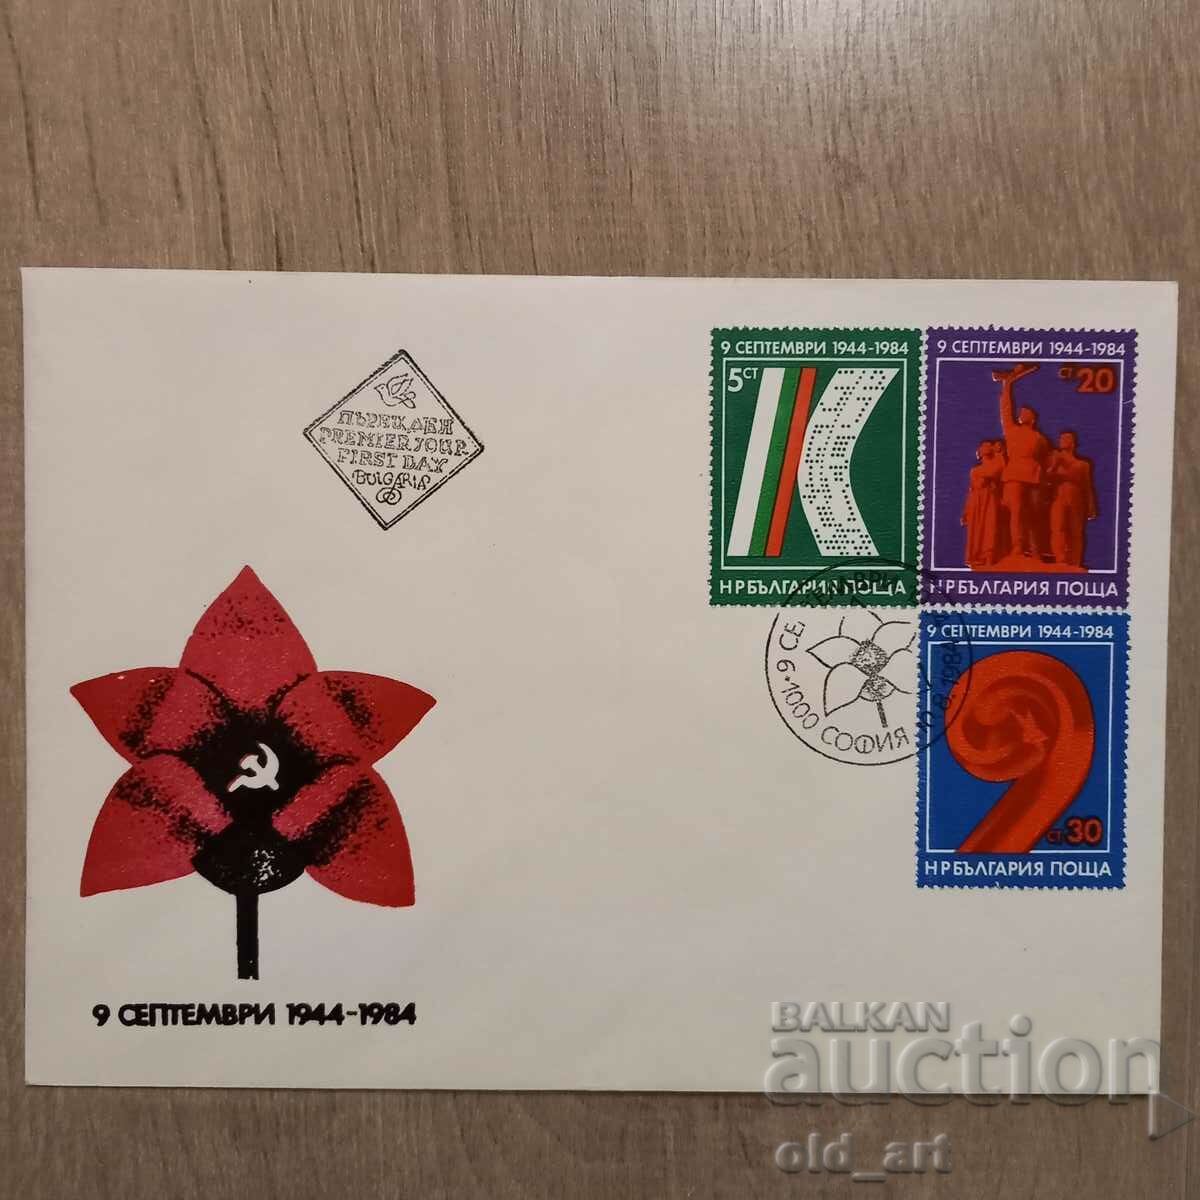 Postal envelope - 40 years 9 September 1944